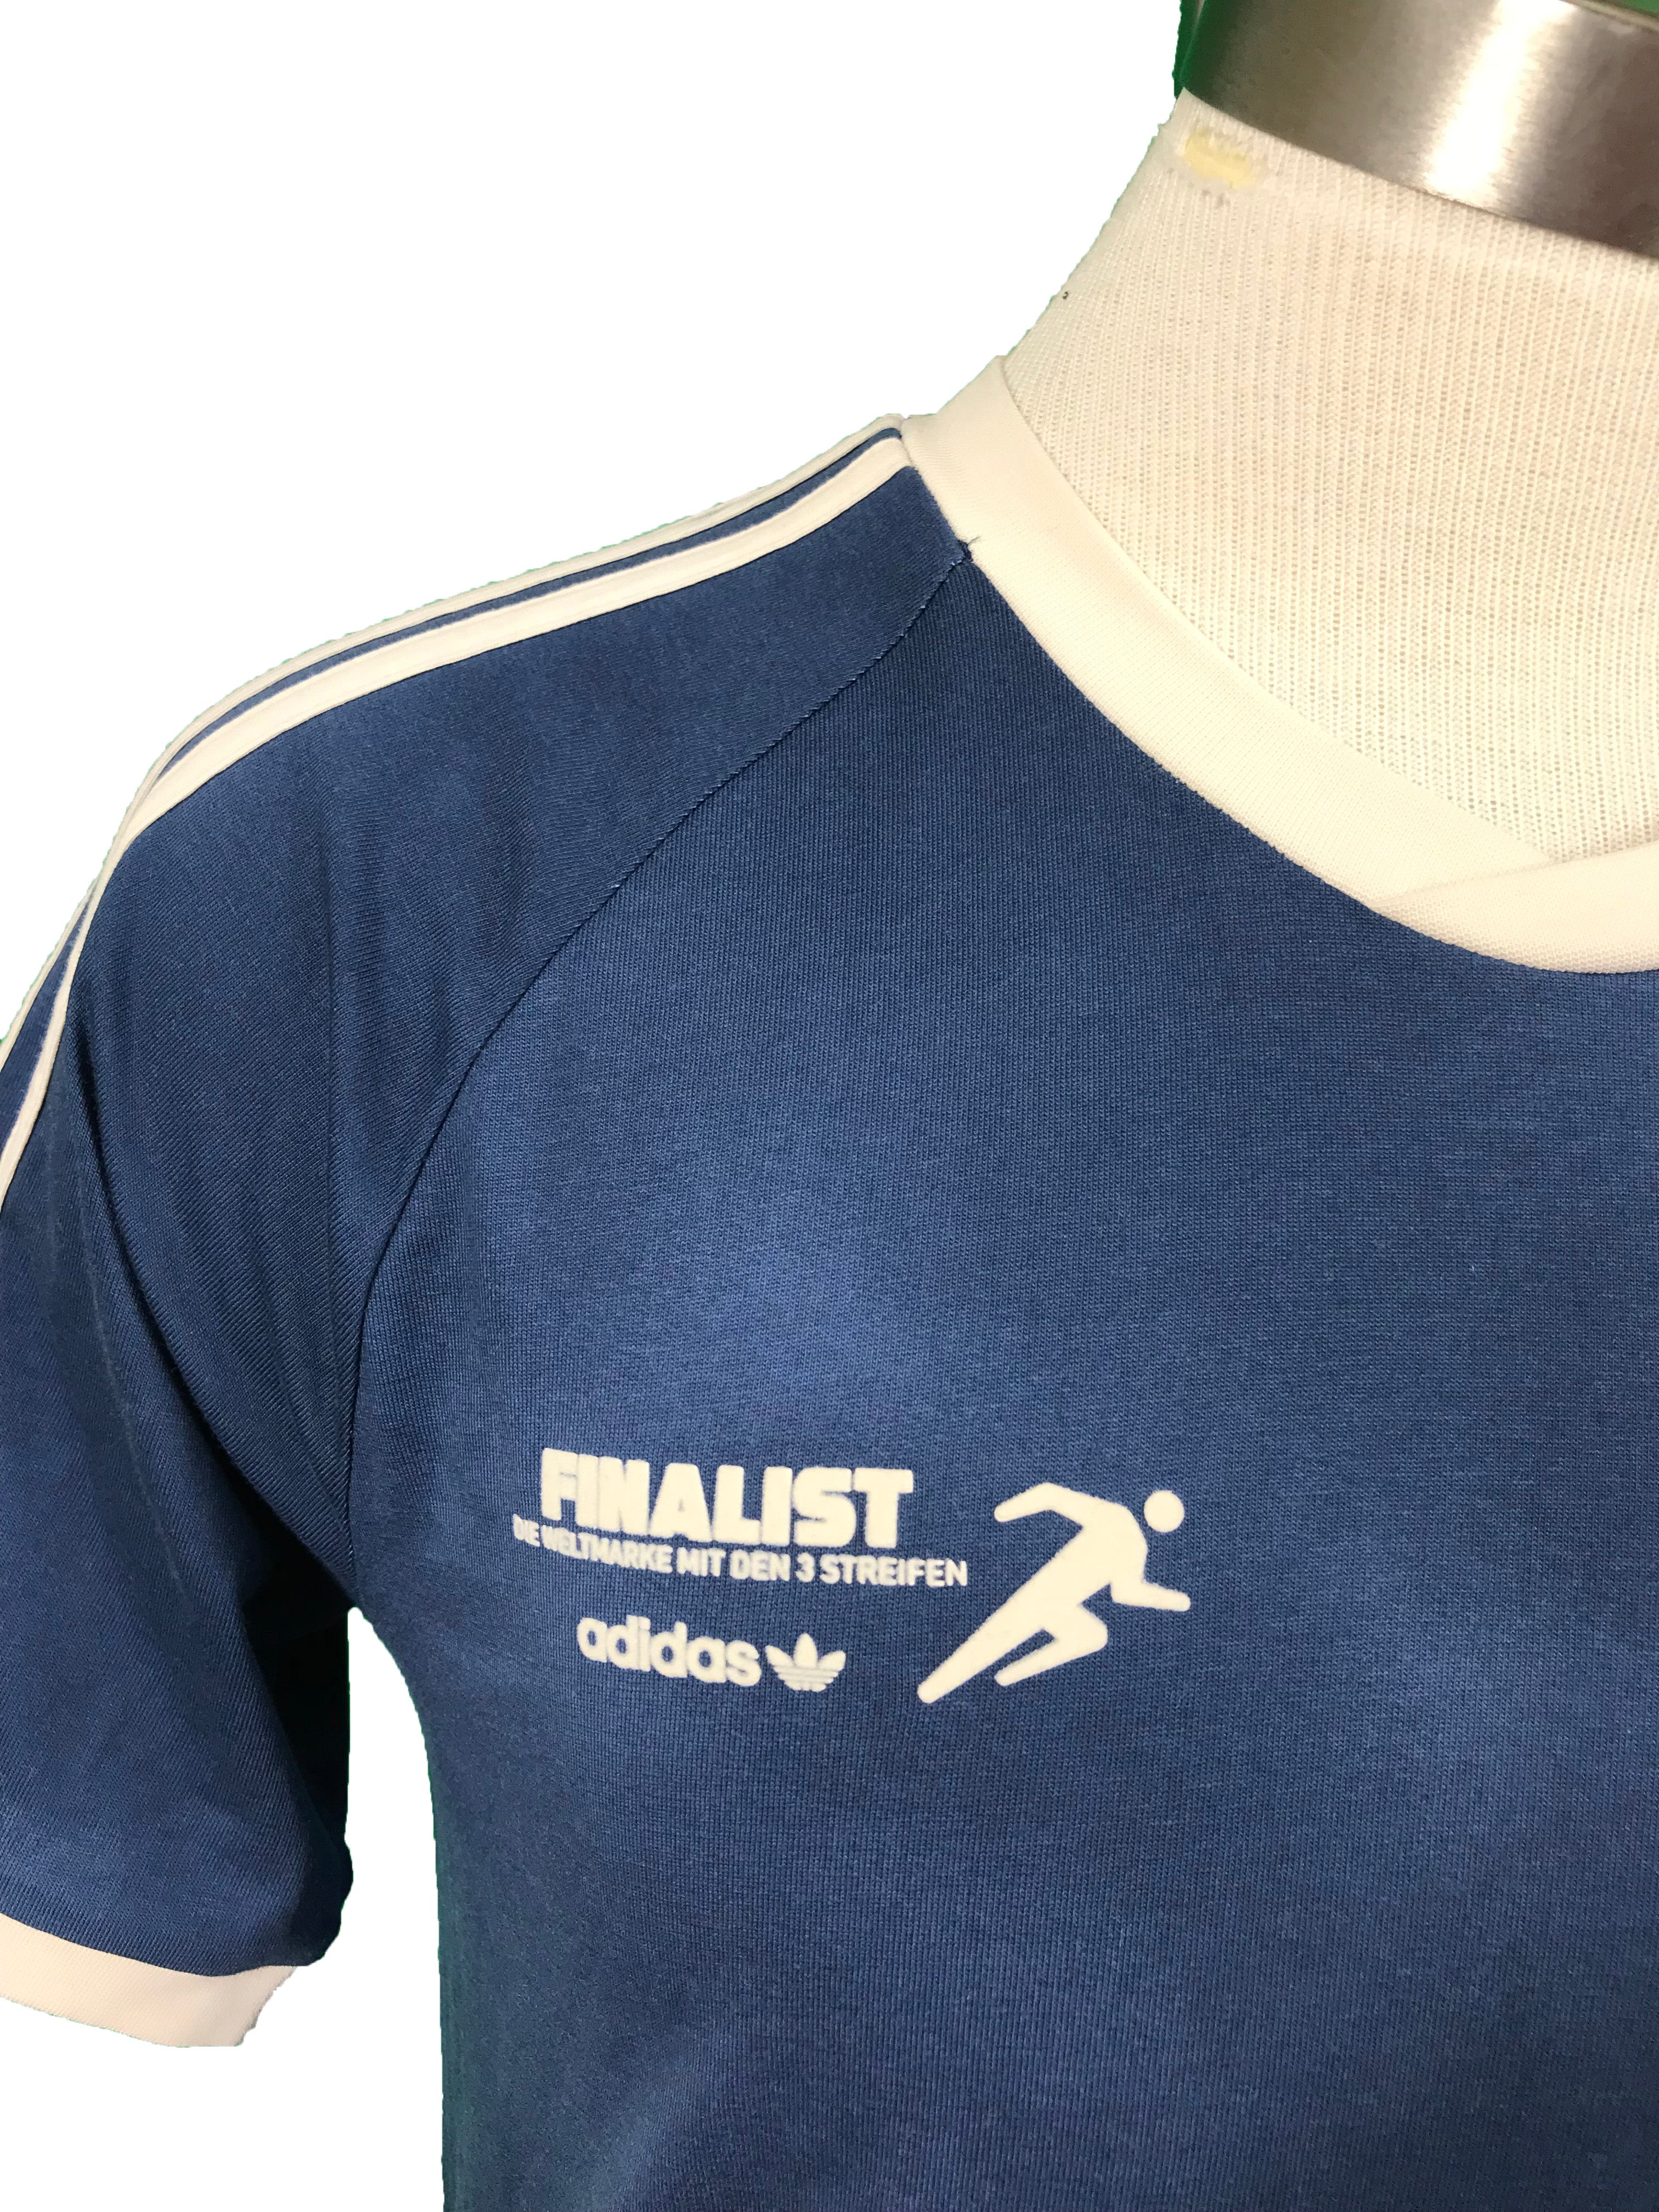 Adidas Blue Finalist T-Shirt Men's Size Small